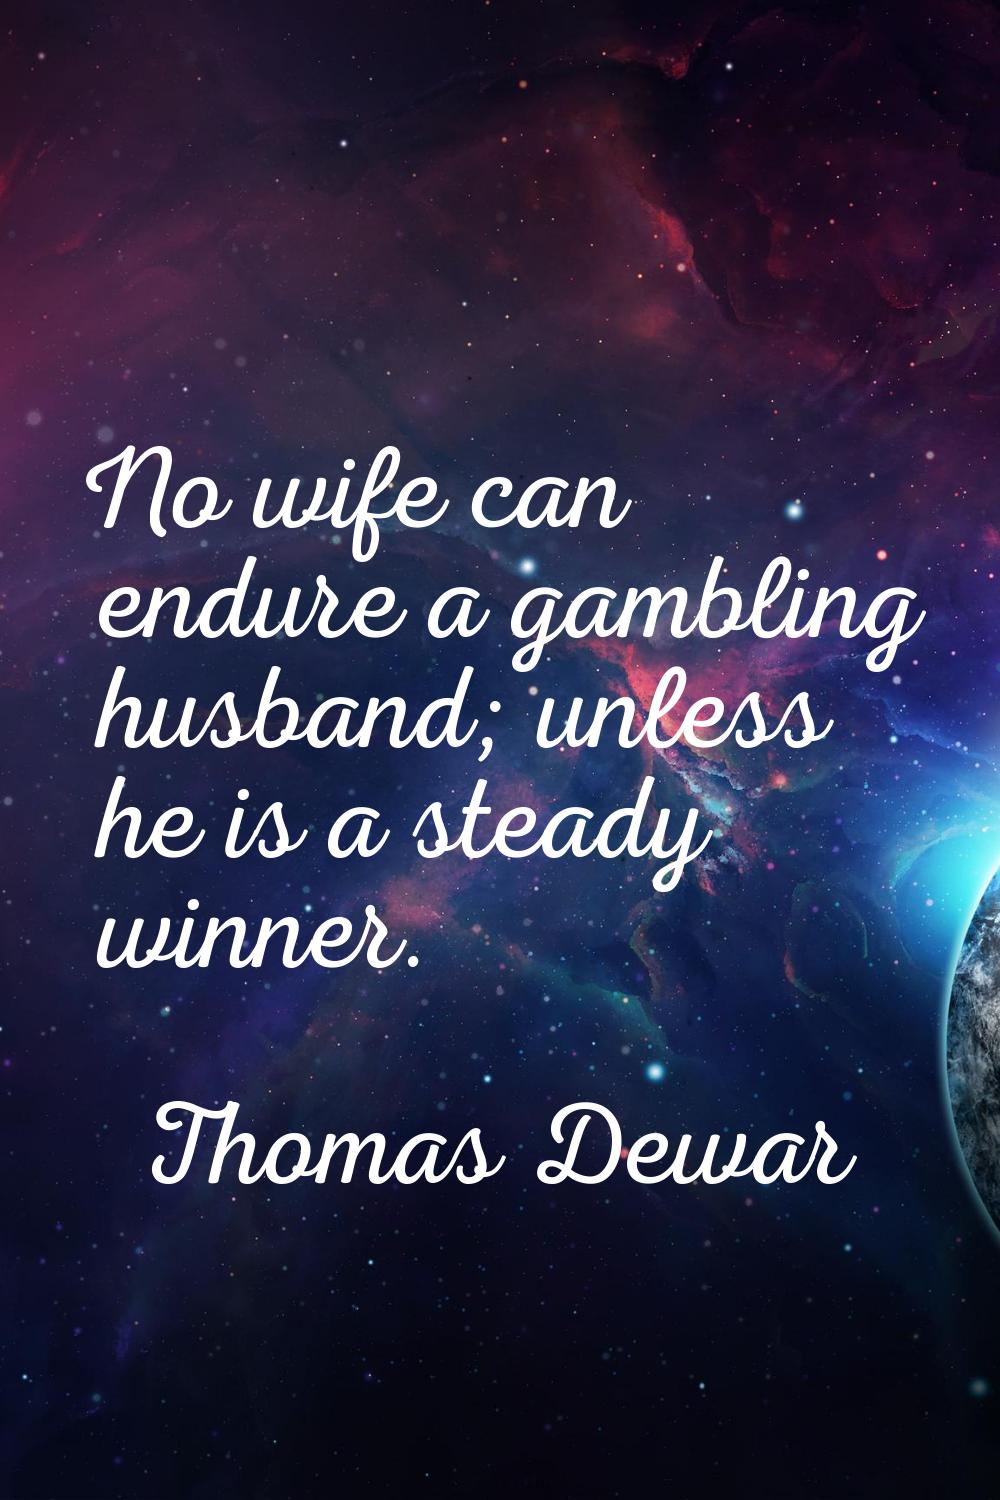 No wife can endure a gambling husband; unless he is a steady winner.